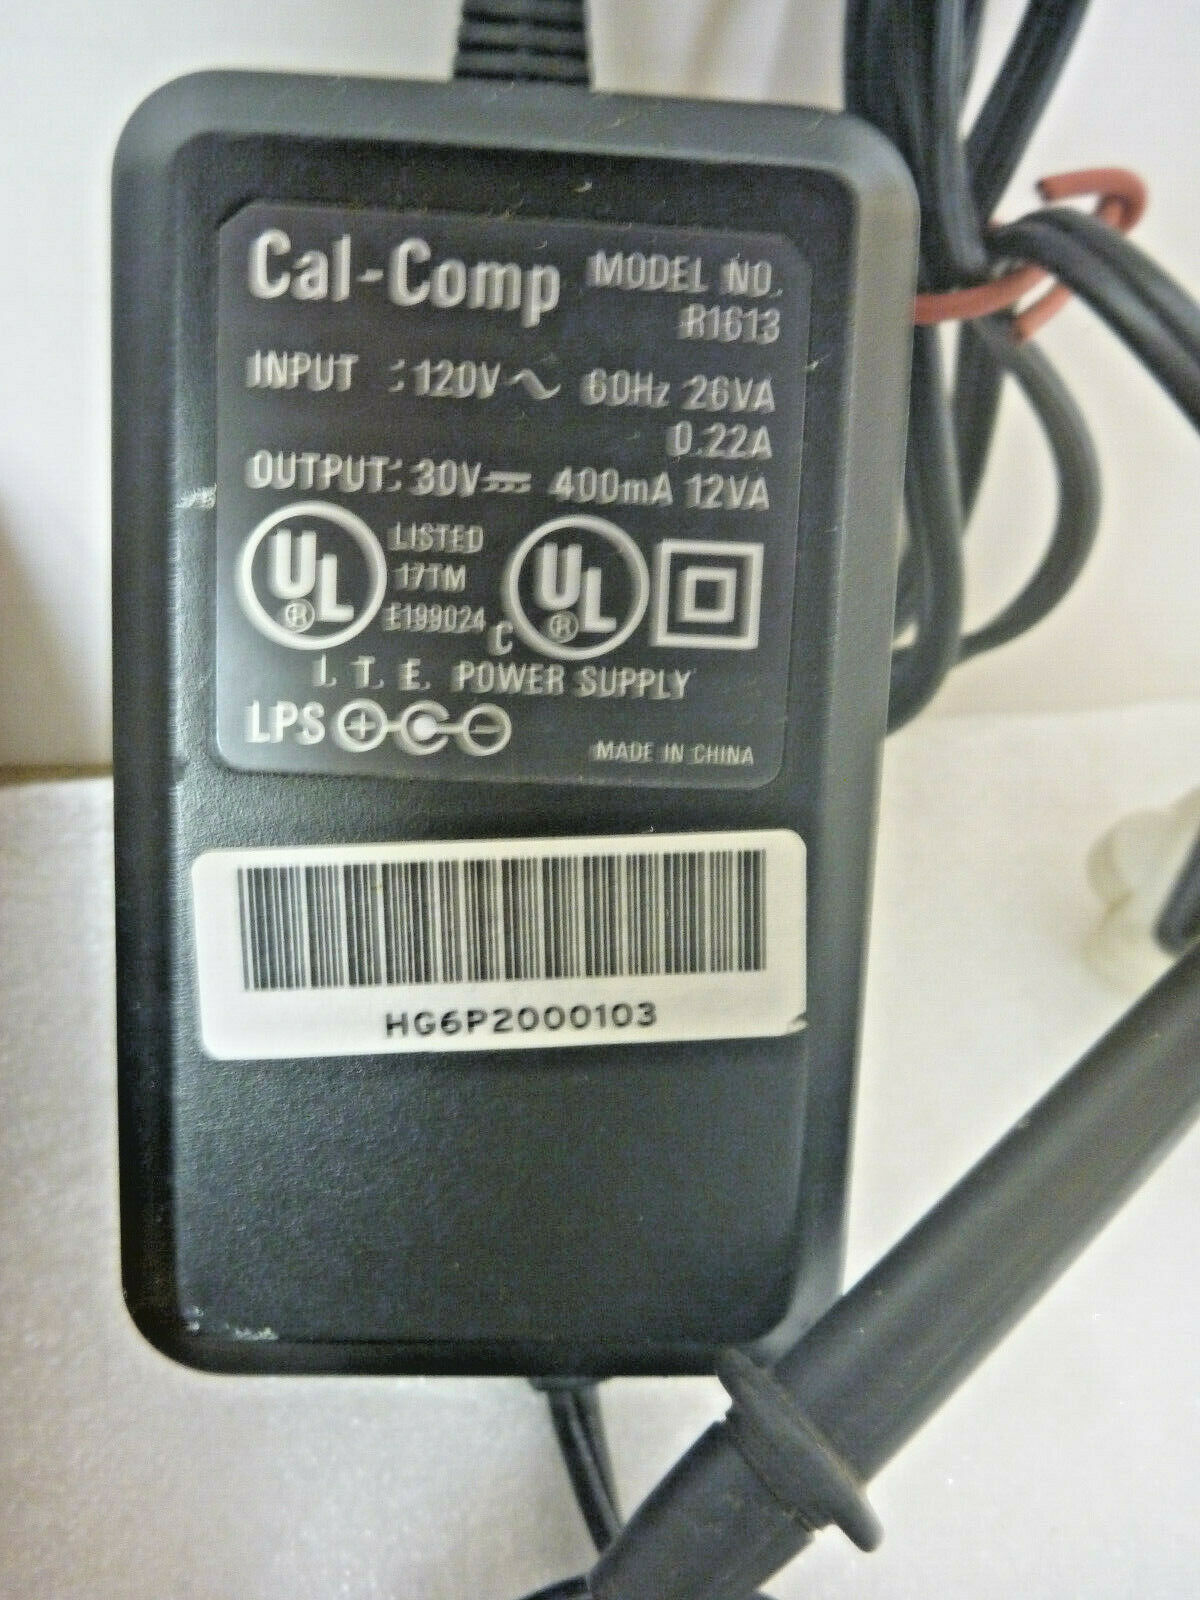 NEW Cal-Comp R1613 ITE Power Supply AC Adapter DC 30V 400mA 12VA